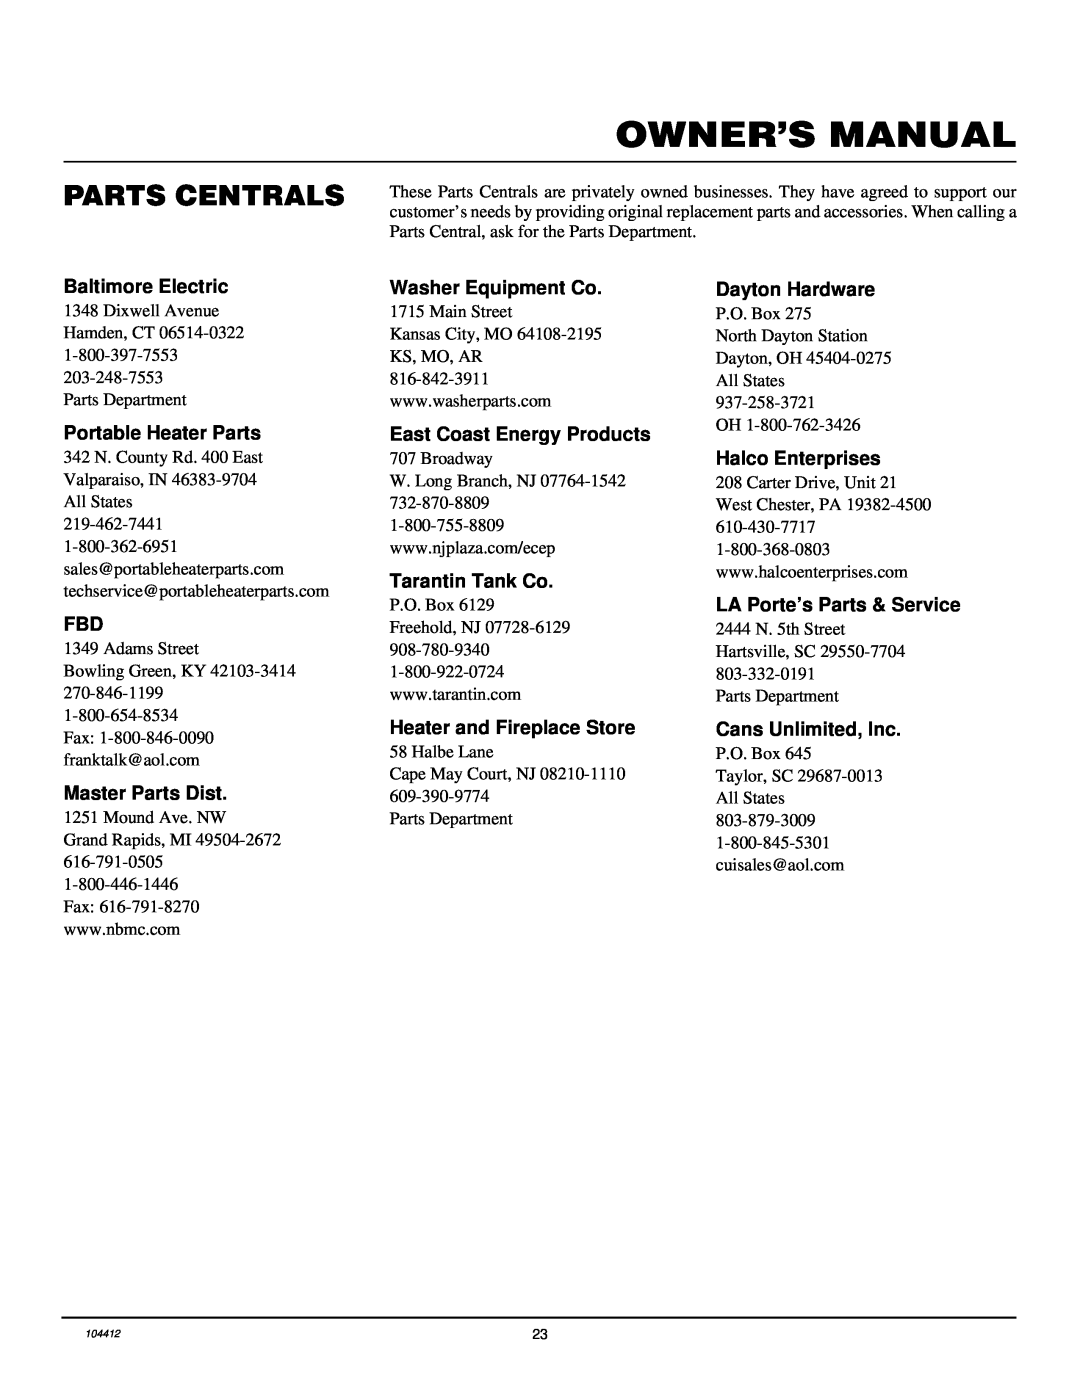 Desa RP30E, CGP20LB Parts Centrals, Baltimore Electric, Portable Heater Parts, Master Parts Dist, Washer Equipment Co 